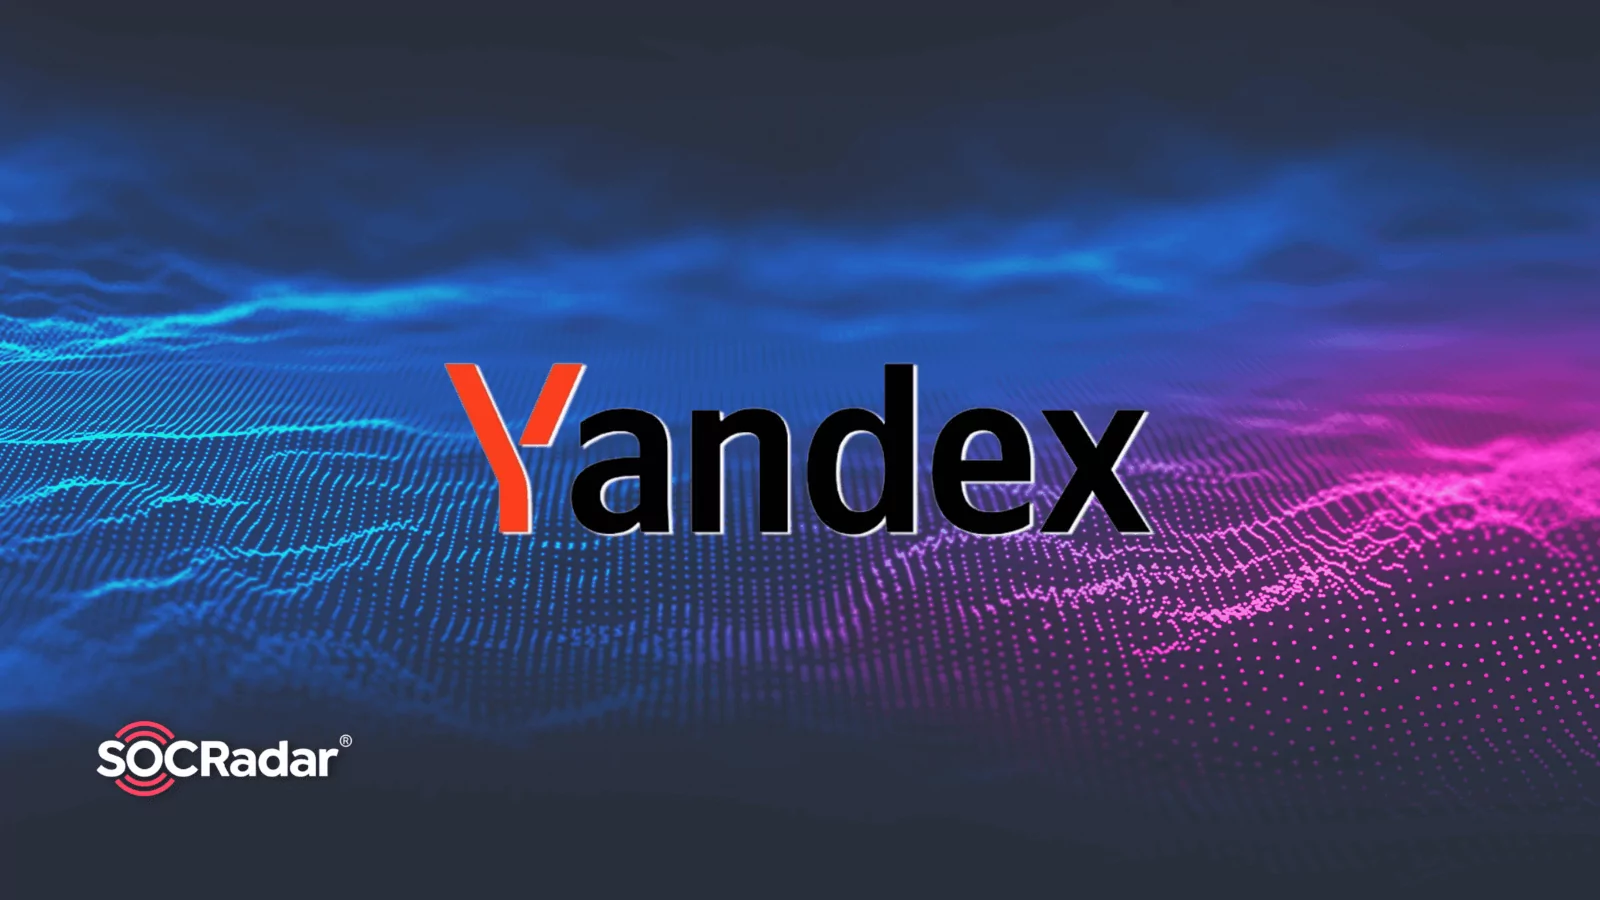 SOCRadar® Cyber Intelligence Inc. | Yandex Code Repositories Leaked Allegedly by Former Employee